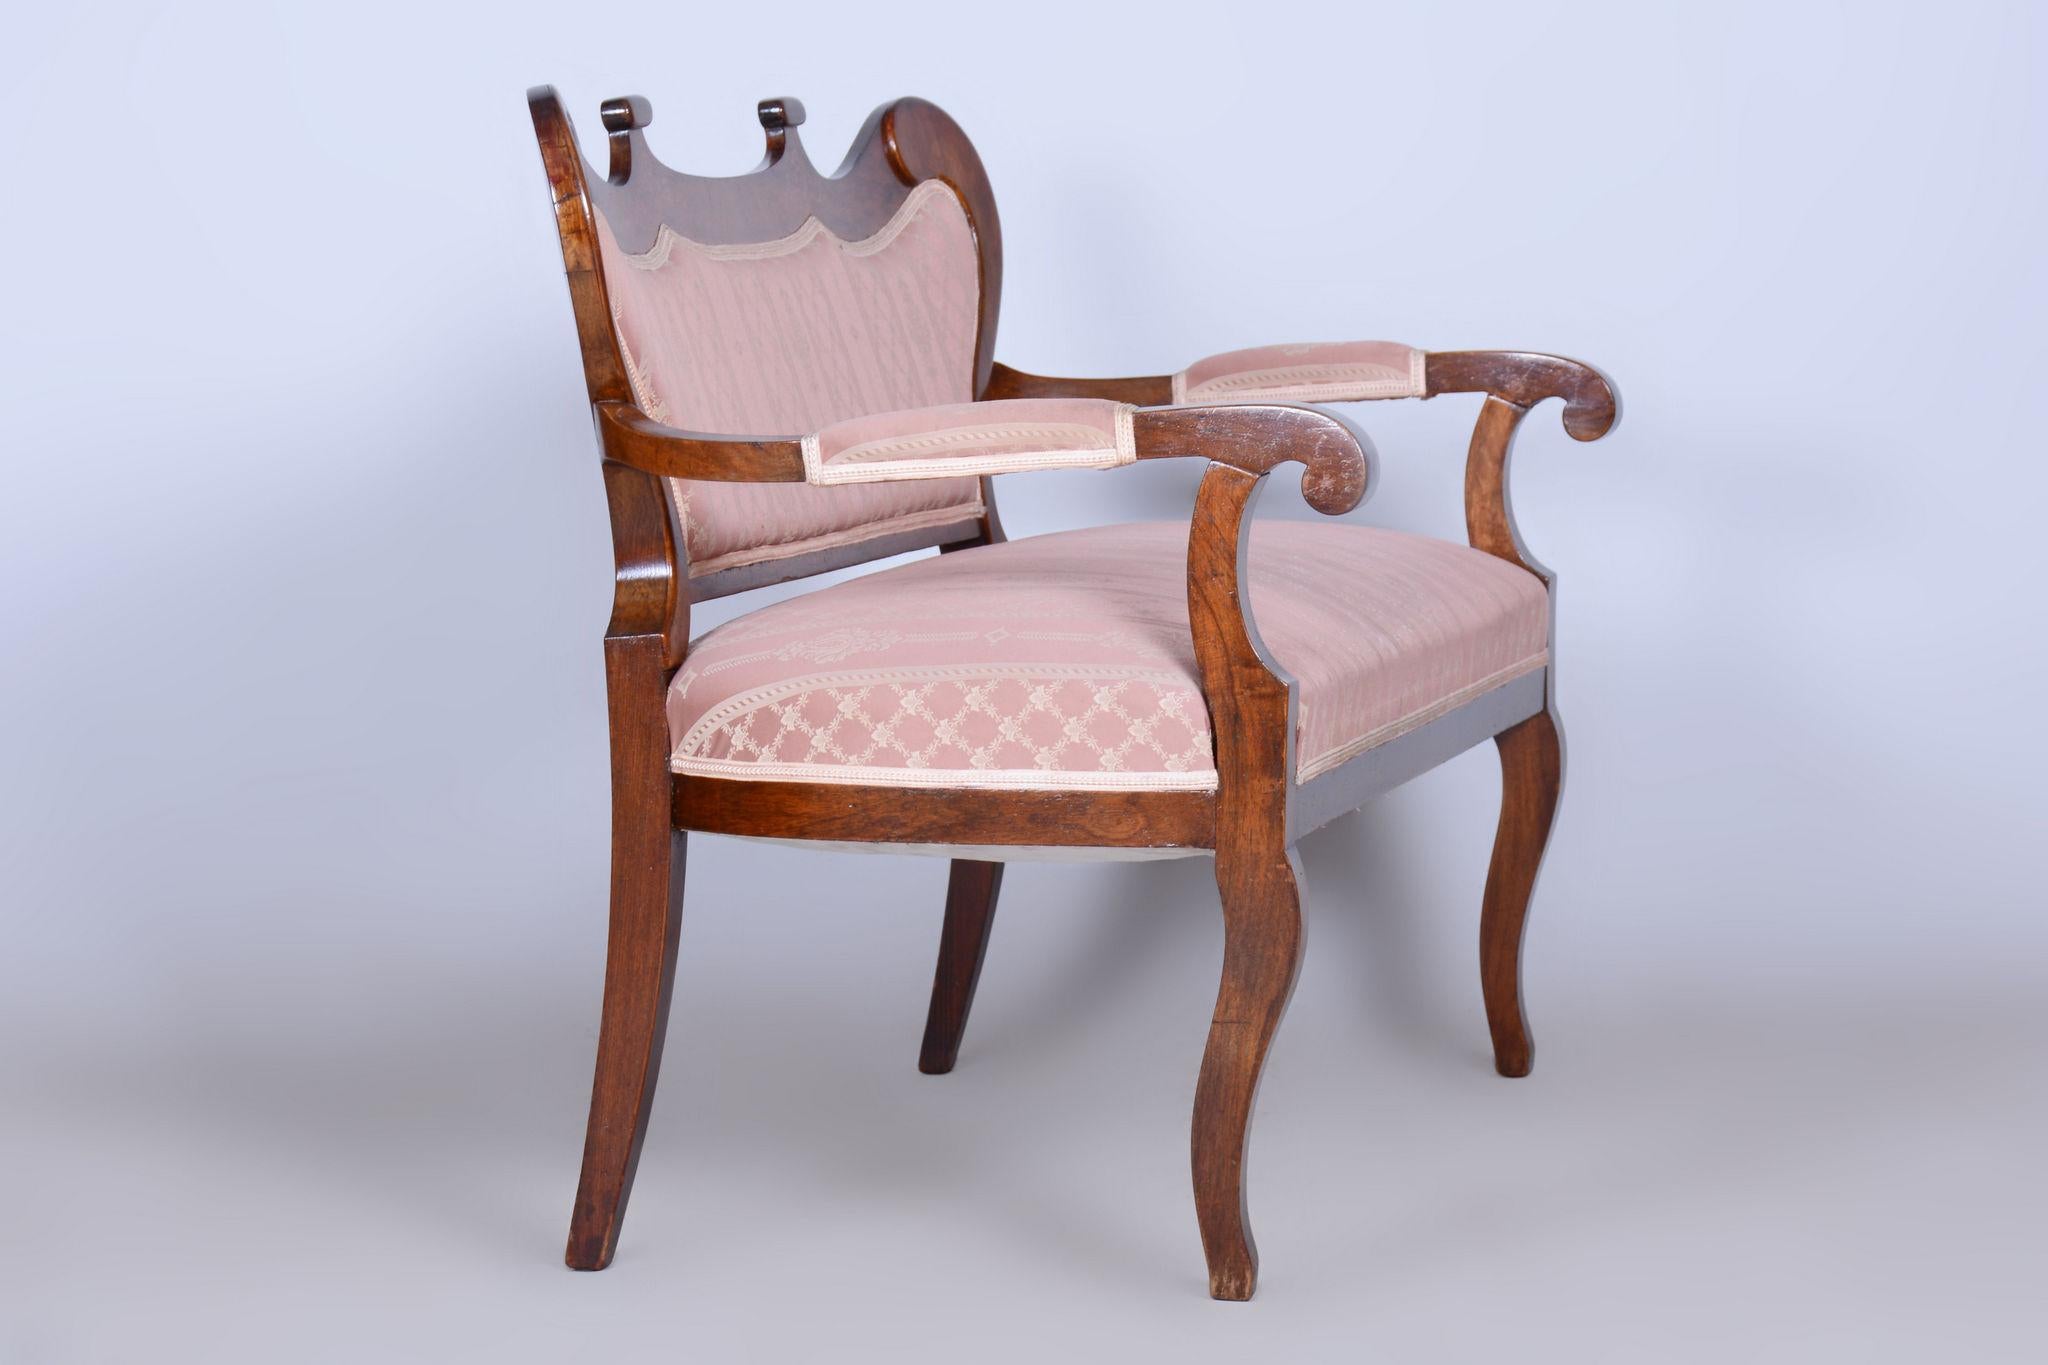 Restored Biedermeier Seating Set, Oak Walnut, Stable Constructon, Austria, 1840s For Sale 7